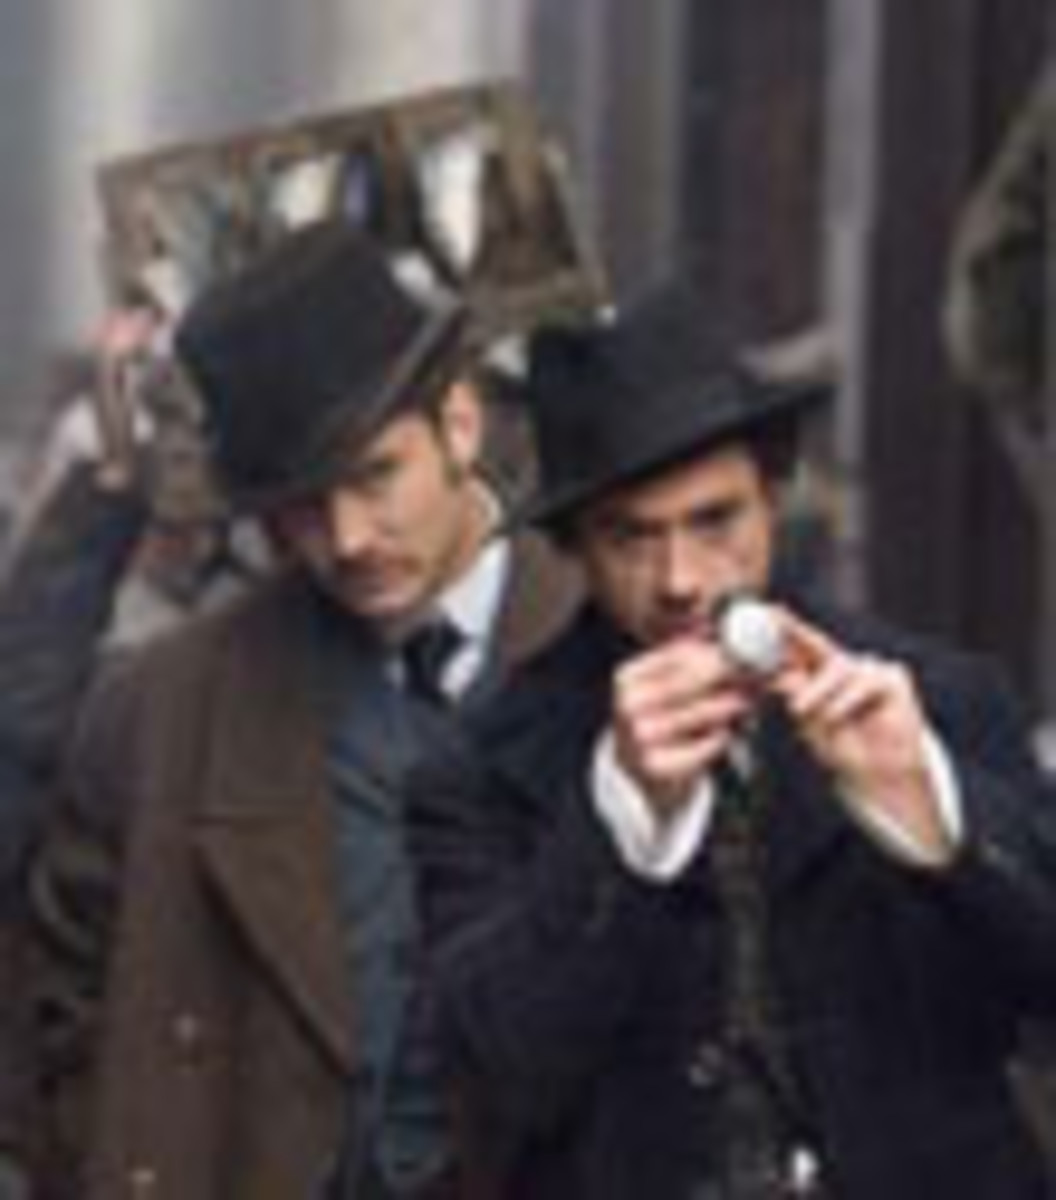 Jude Law and Robert Downey Jr. in Sherlock Holmes